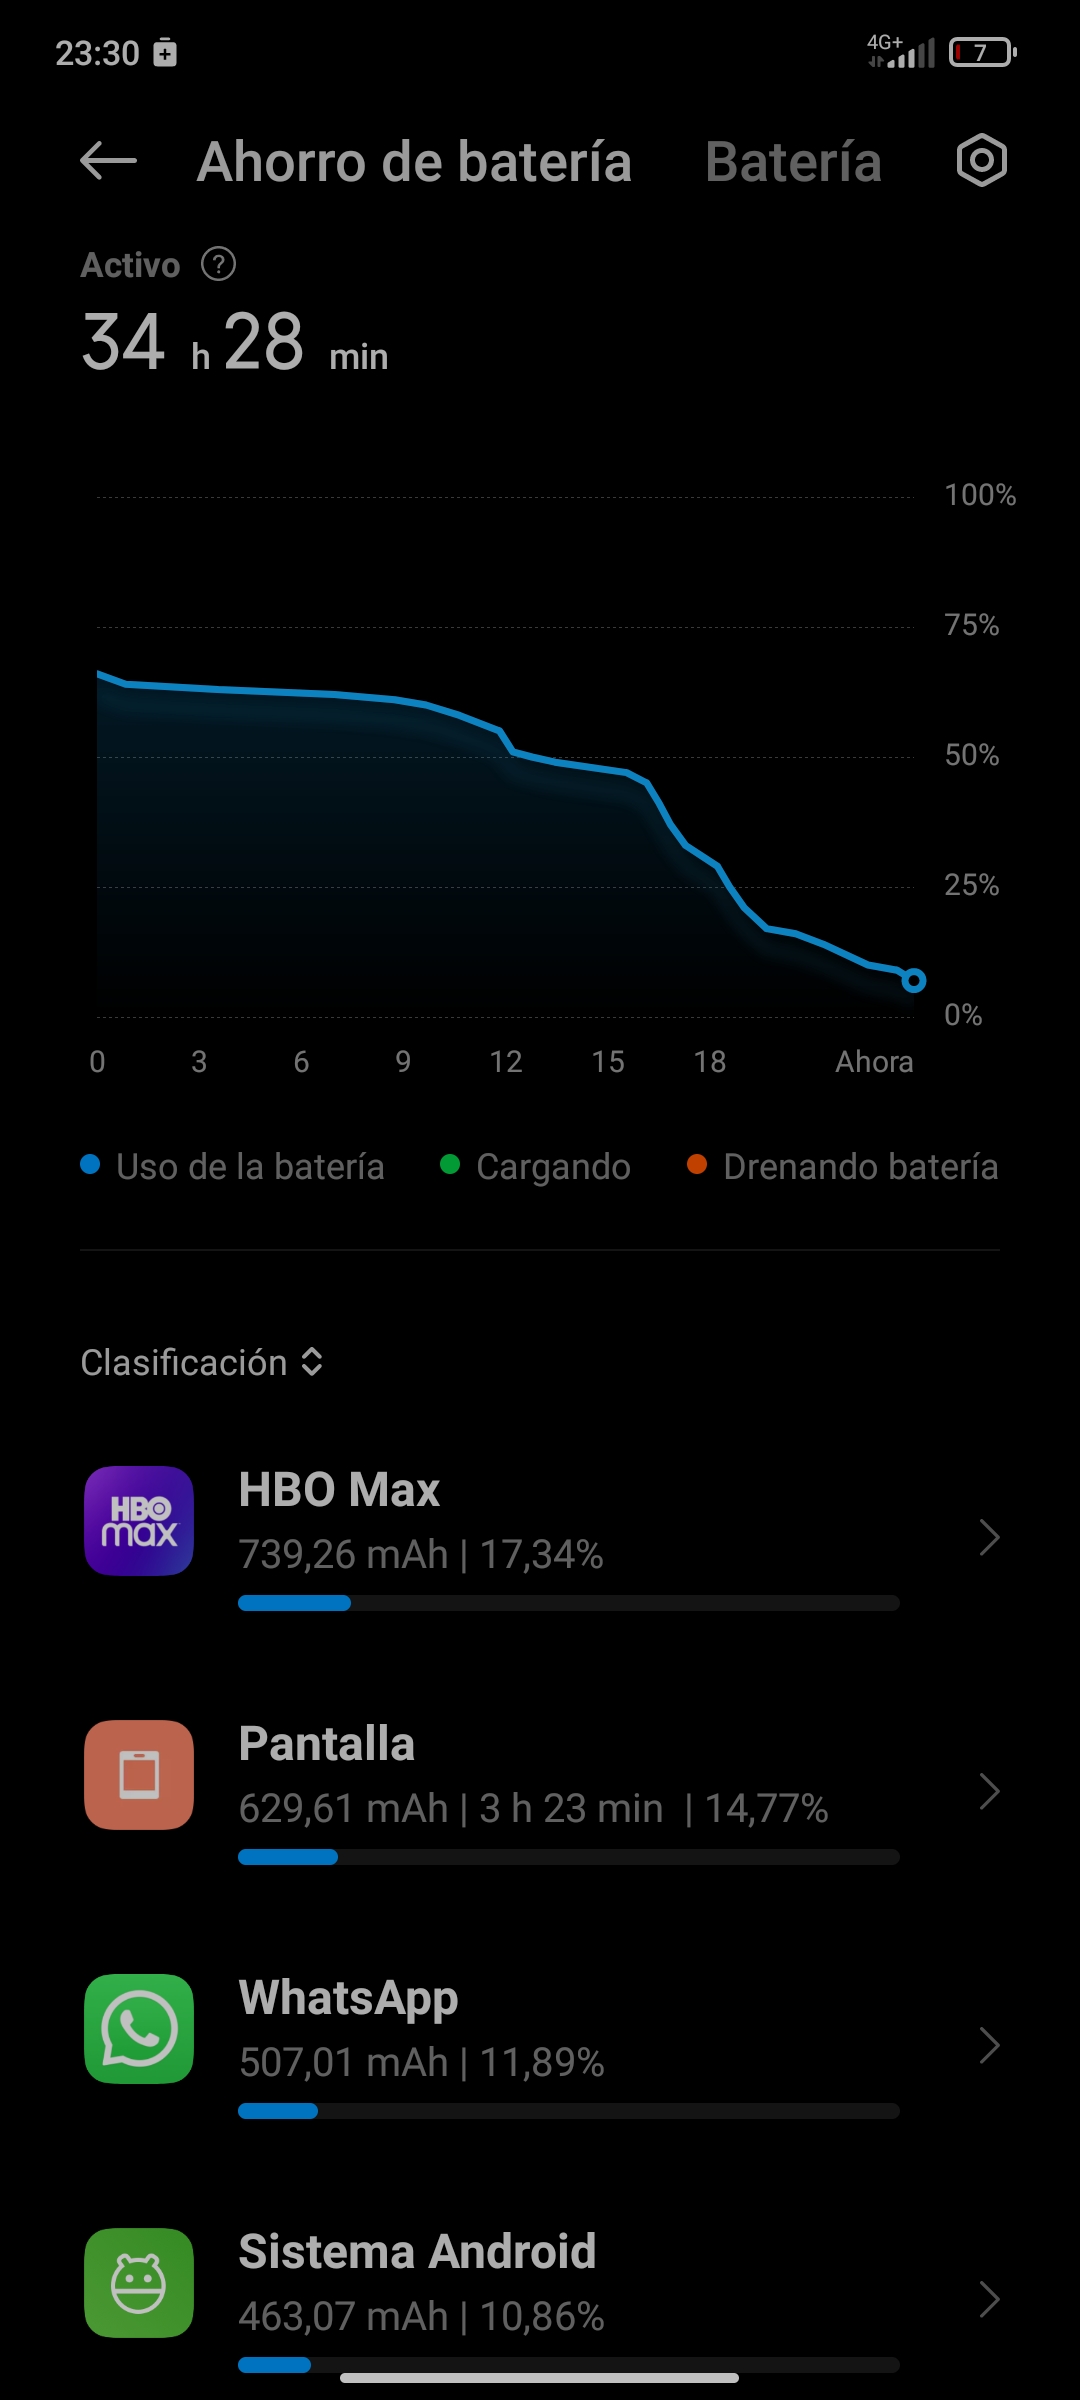 Análisis de Xiaomi Redmi Note 11 Pro+ 5G: el "premium" de la gama media